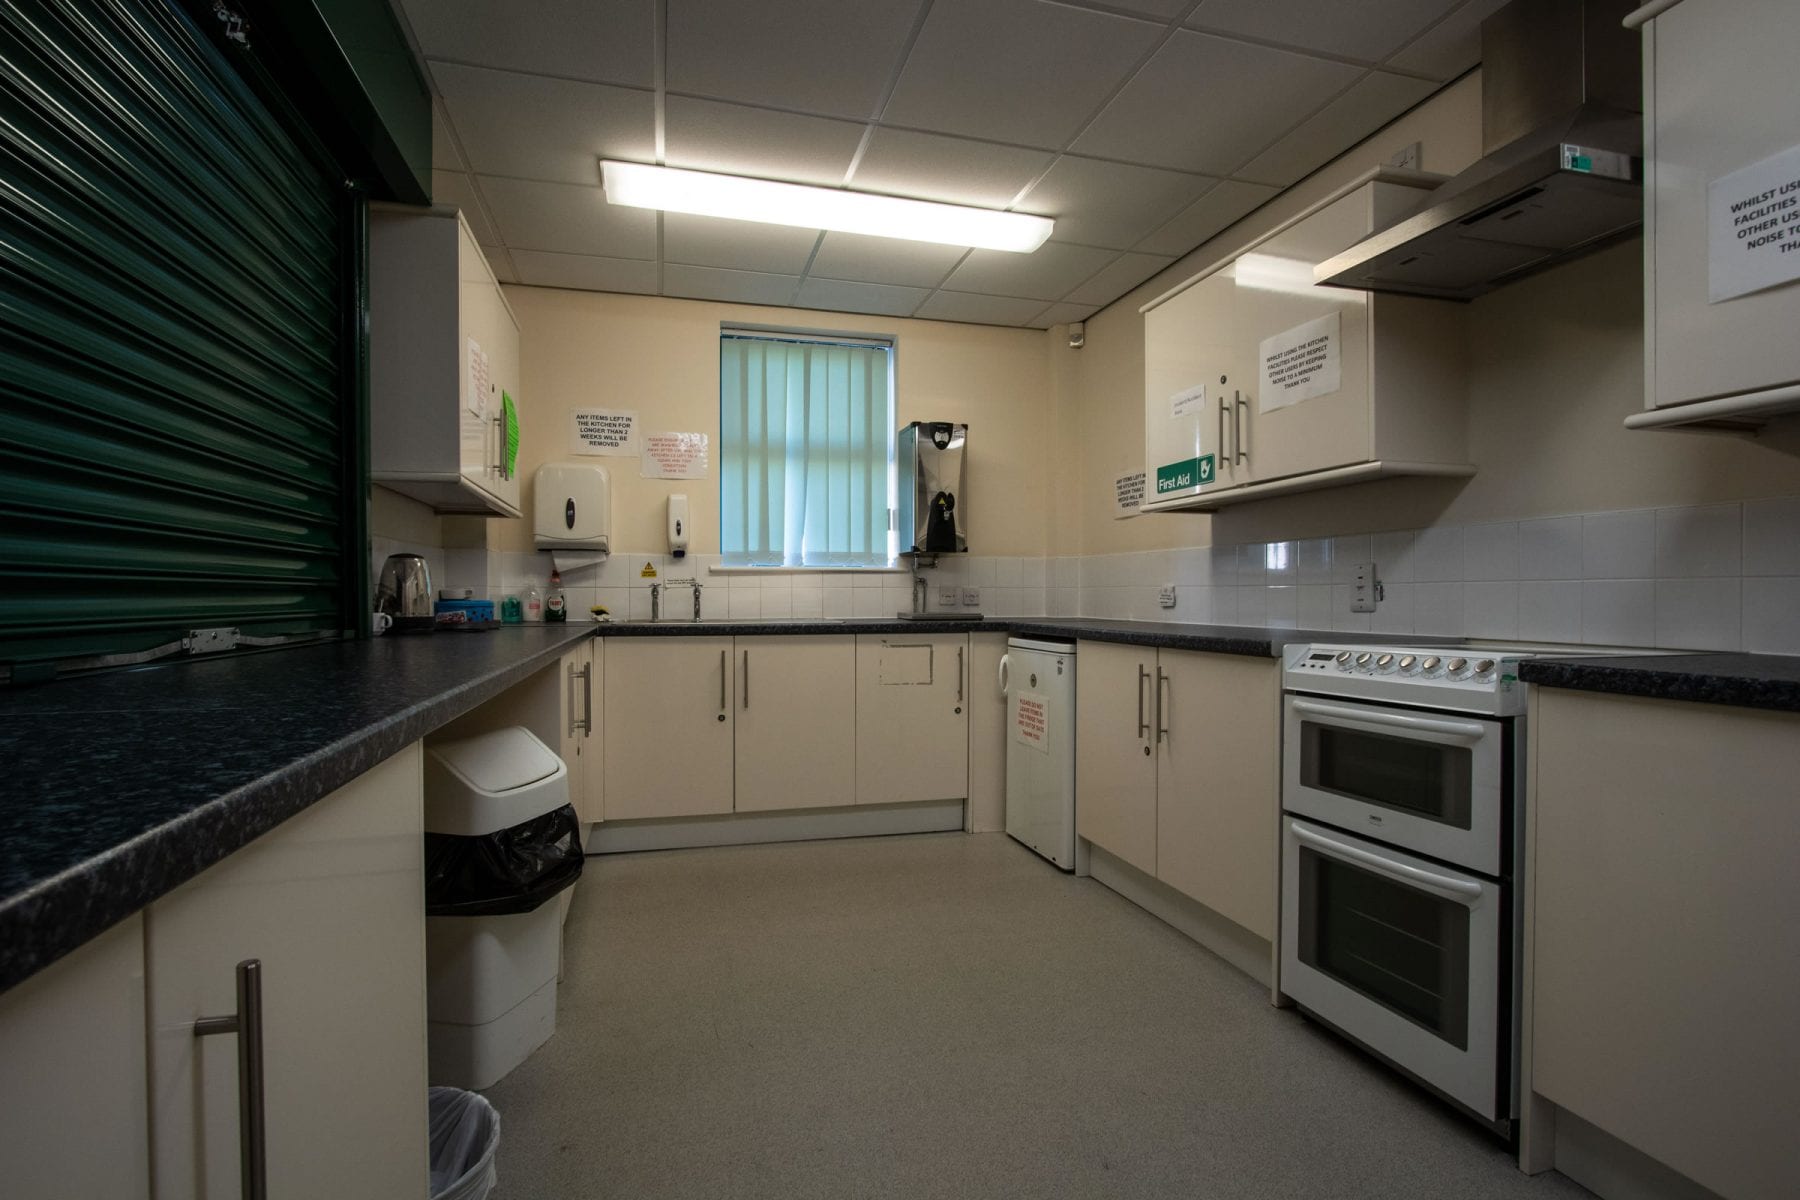 Kitchen facilities at Petuaria Community Centre